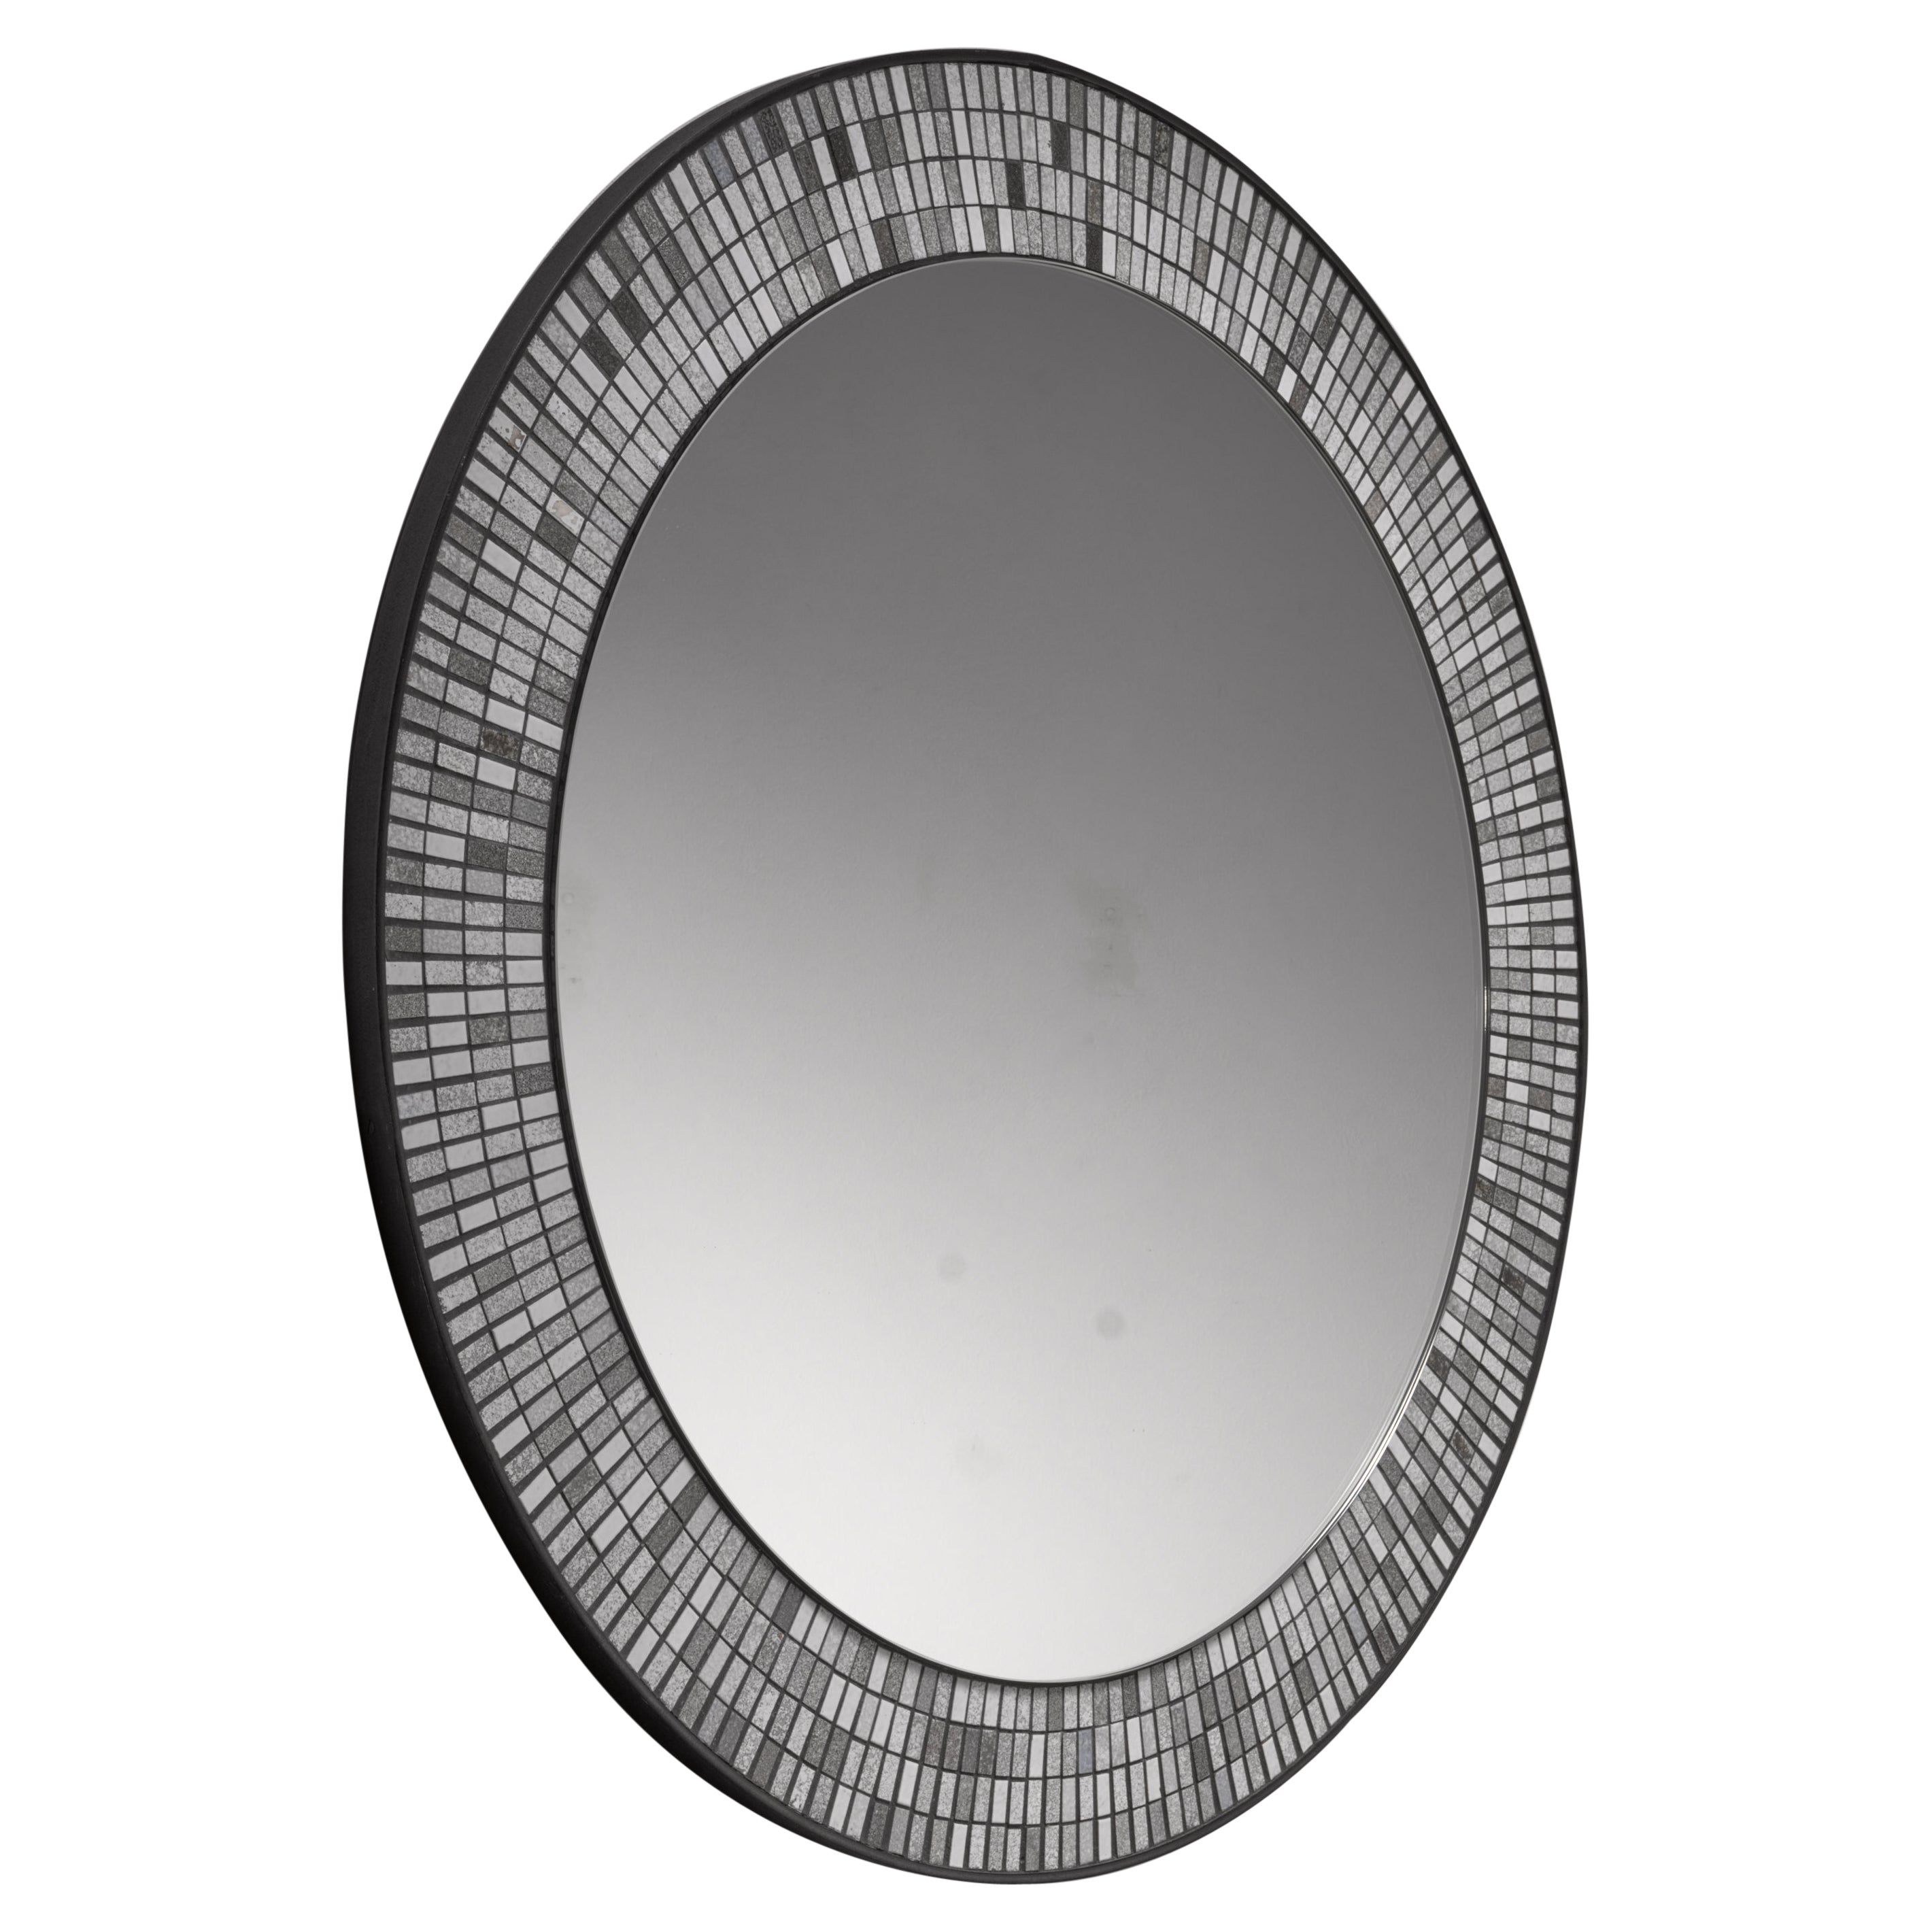 Round Mosaic Wall Mirror